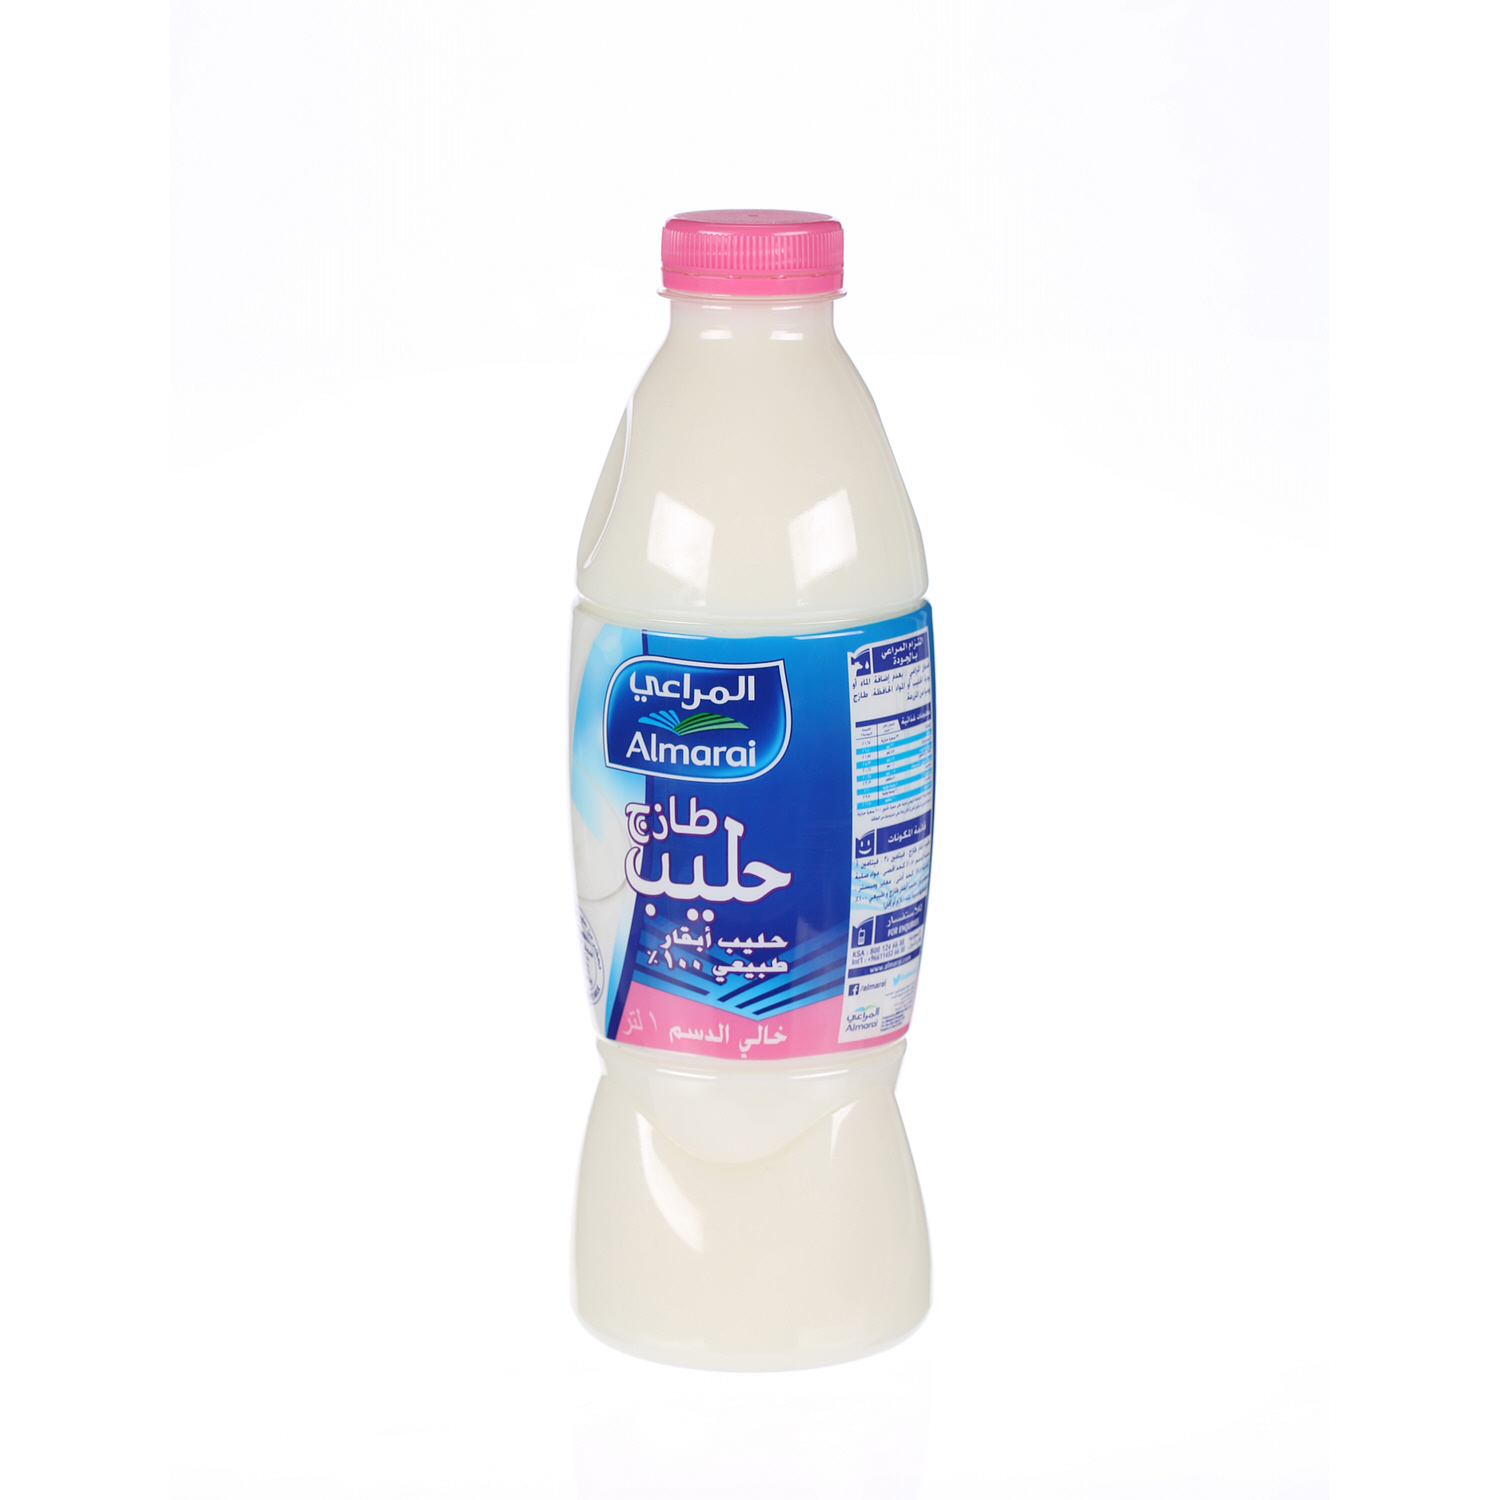 Almarai Fresh Milk Skimmed 1Ltr